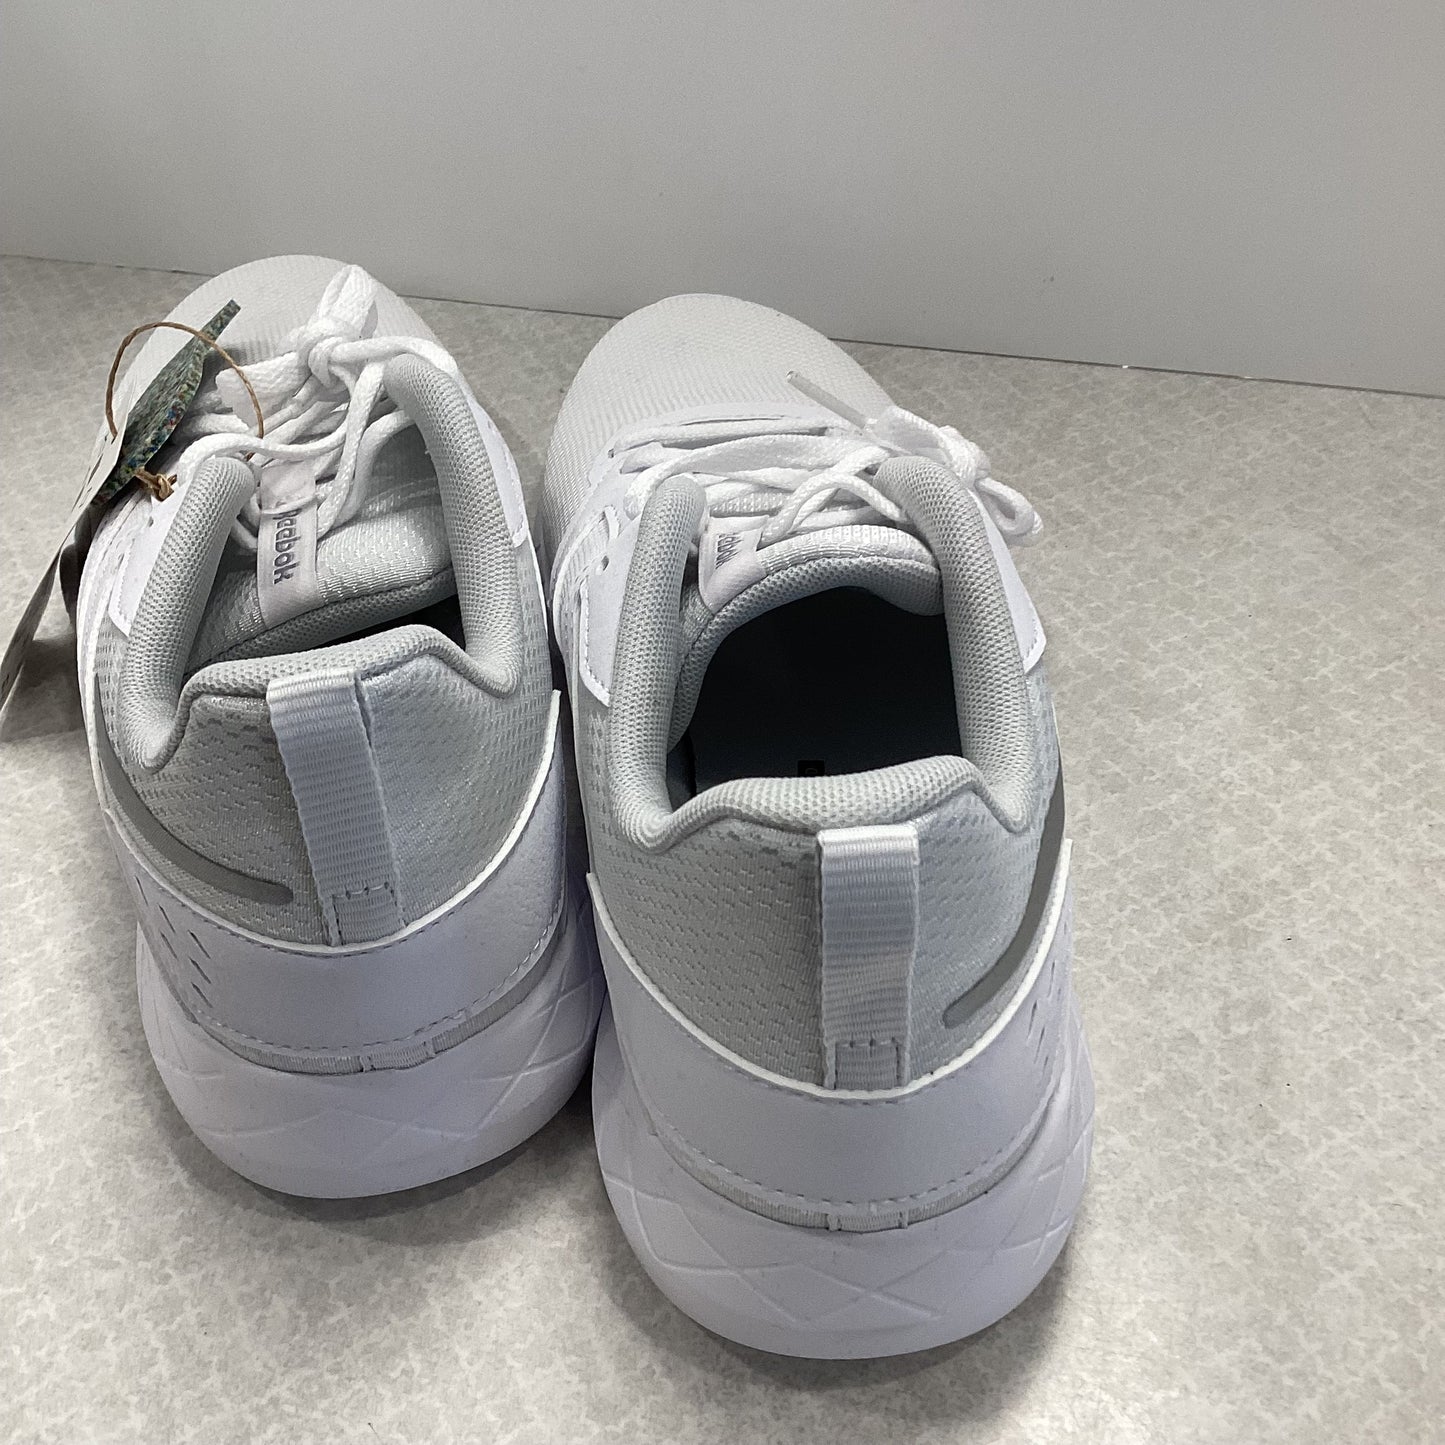 White Shoes Athletic Reebok, Size 11